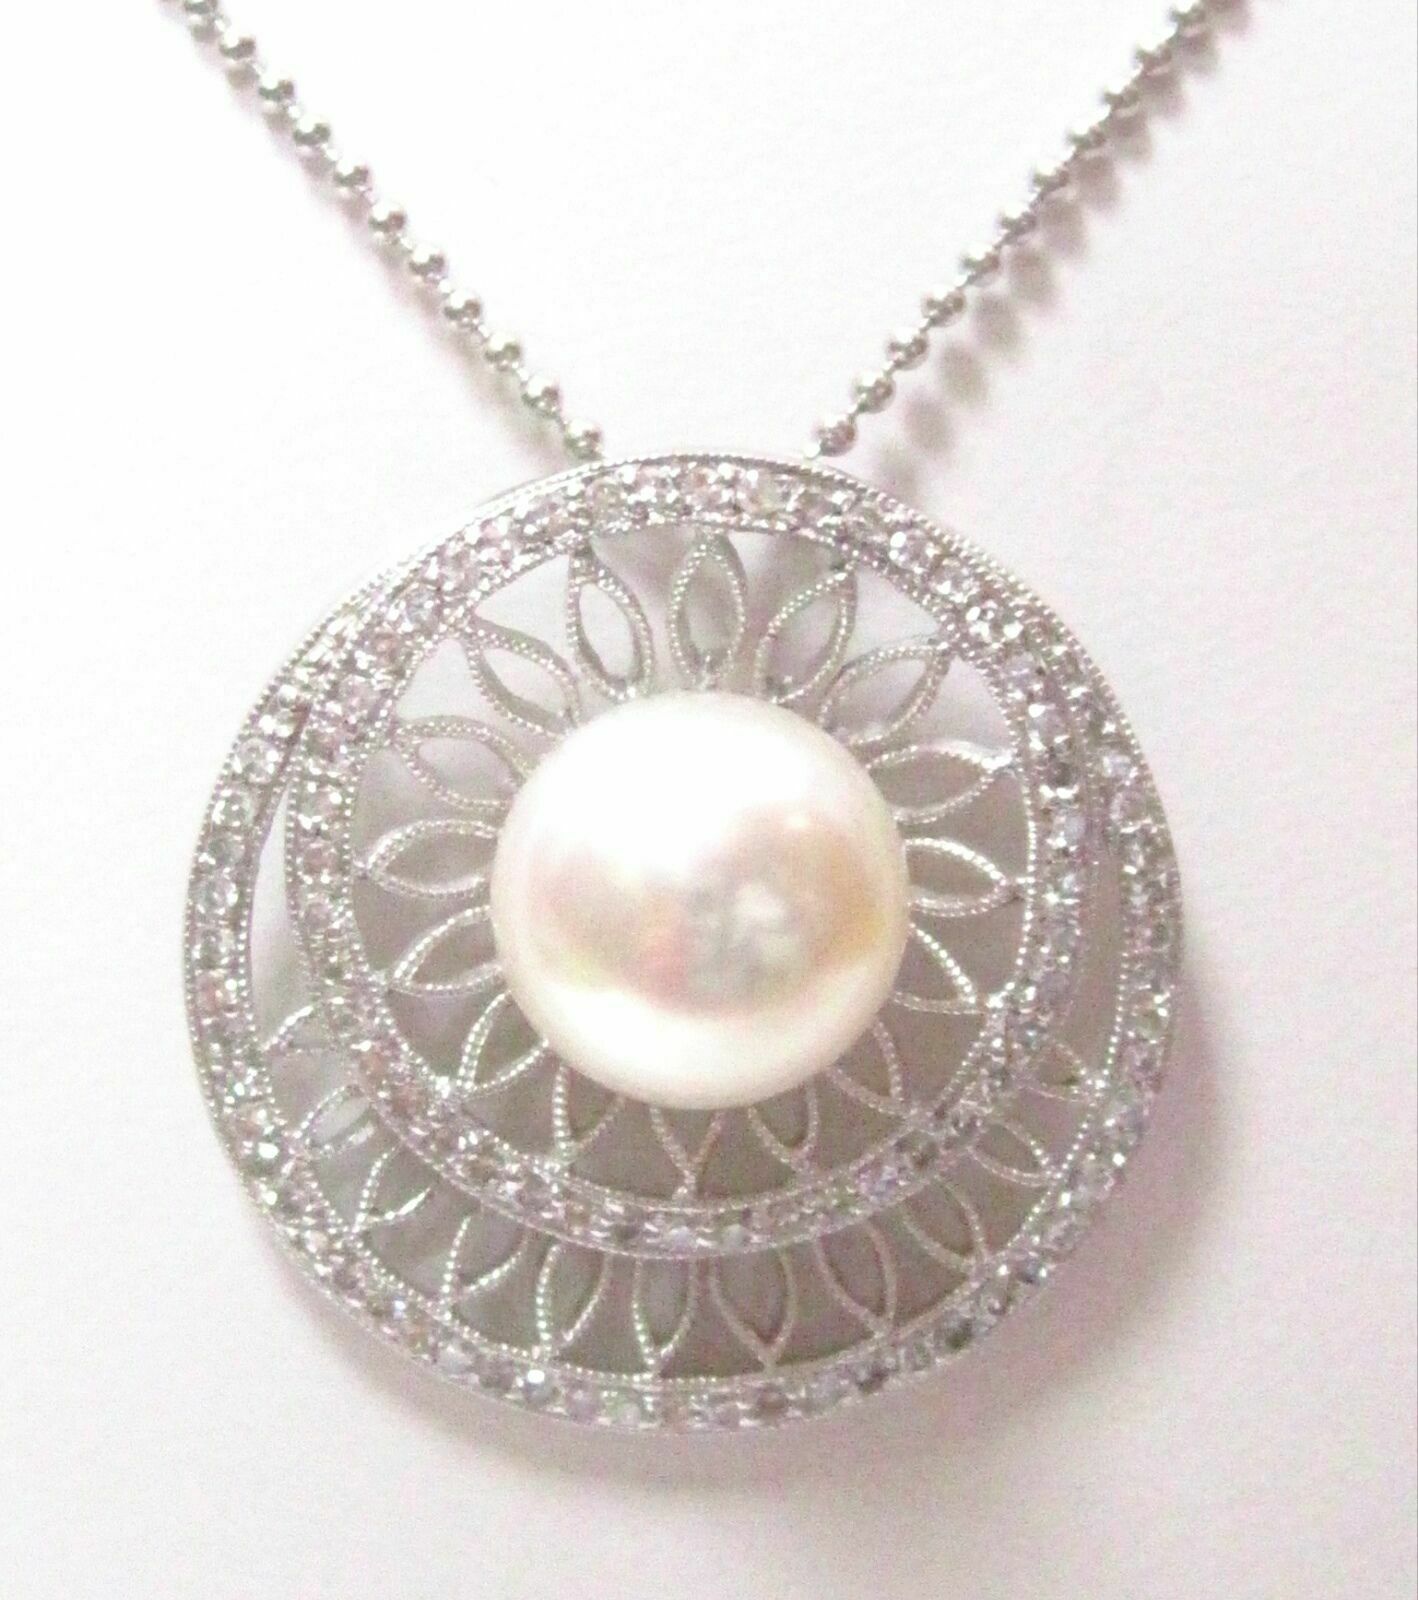 Fine Double-Hoop White Pearl & Diamonds Pendant Necklace 14k White Gold 20" Long